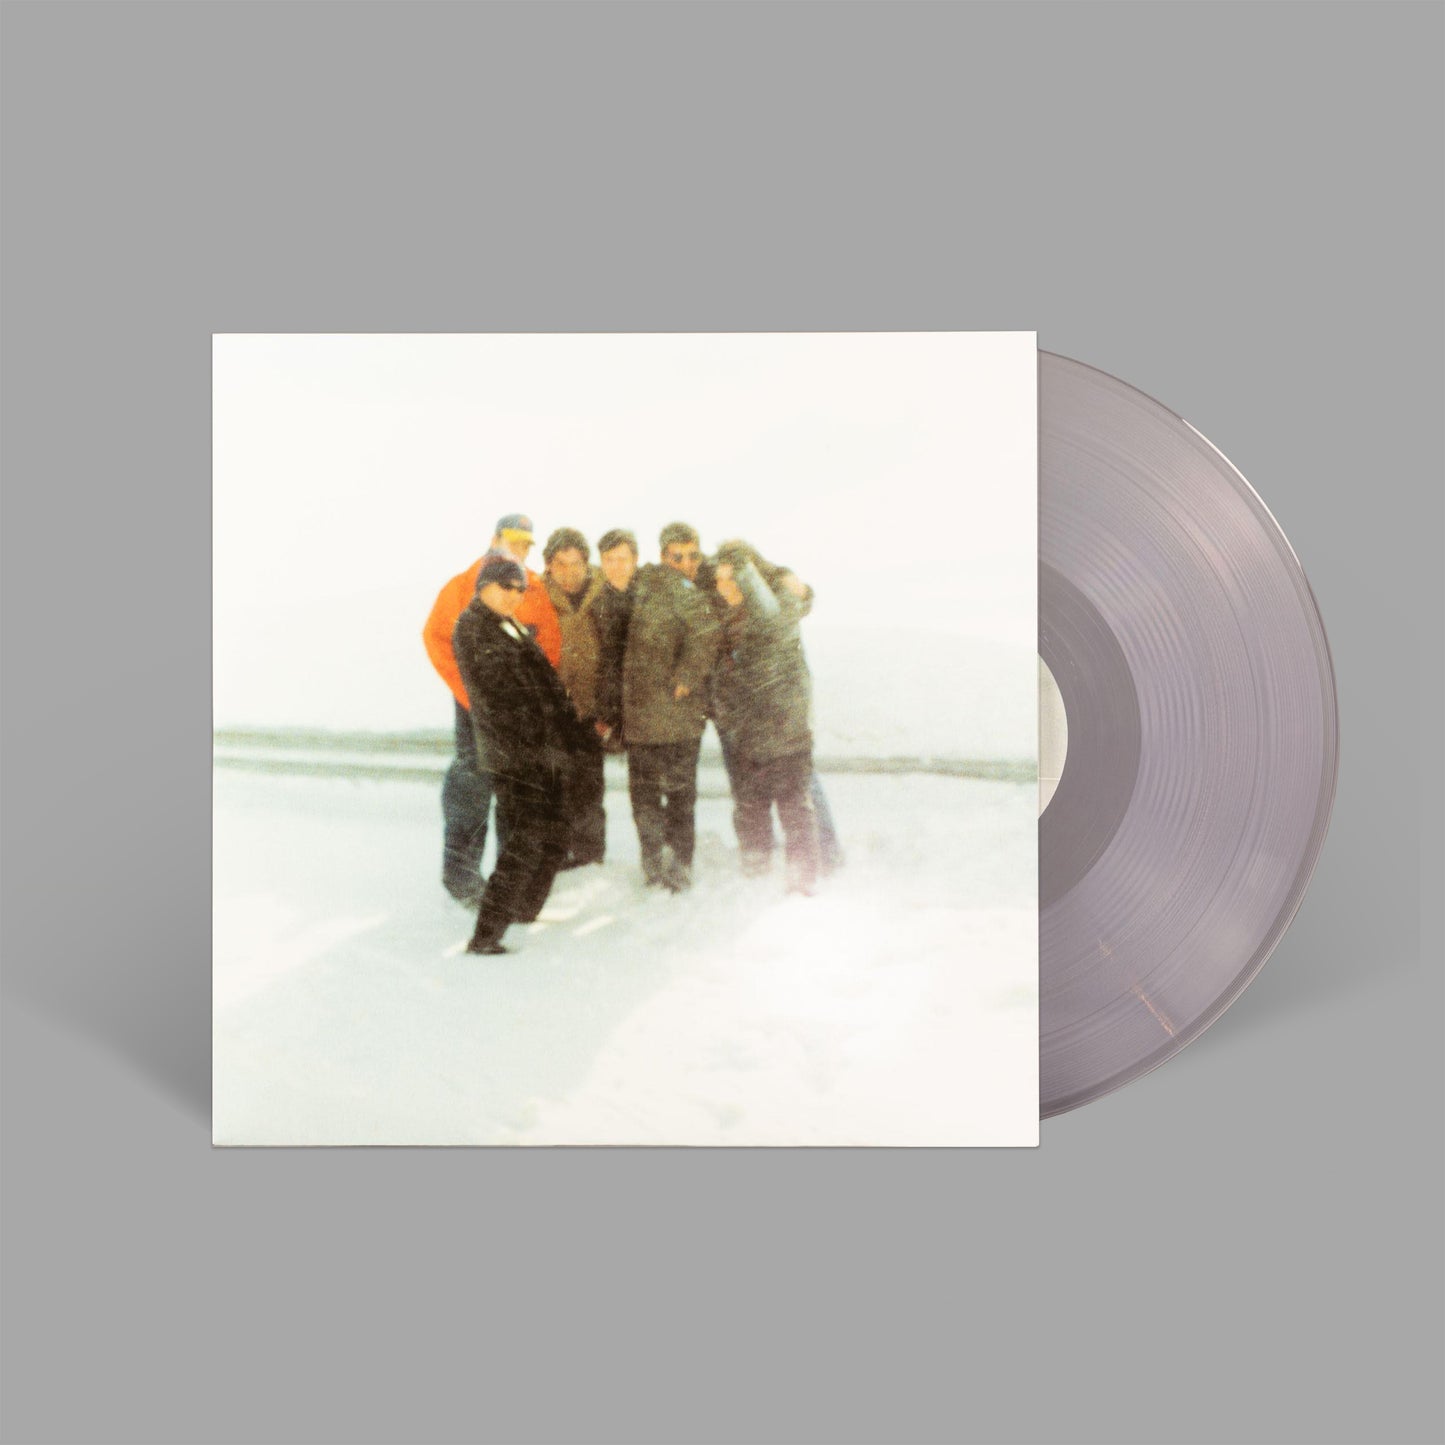 mogwai : e.p. x 3 | Triple Coloured Vinyl Reissue